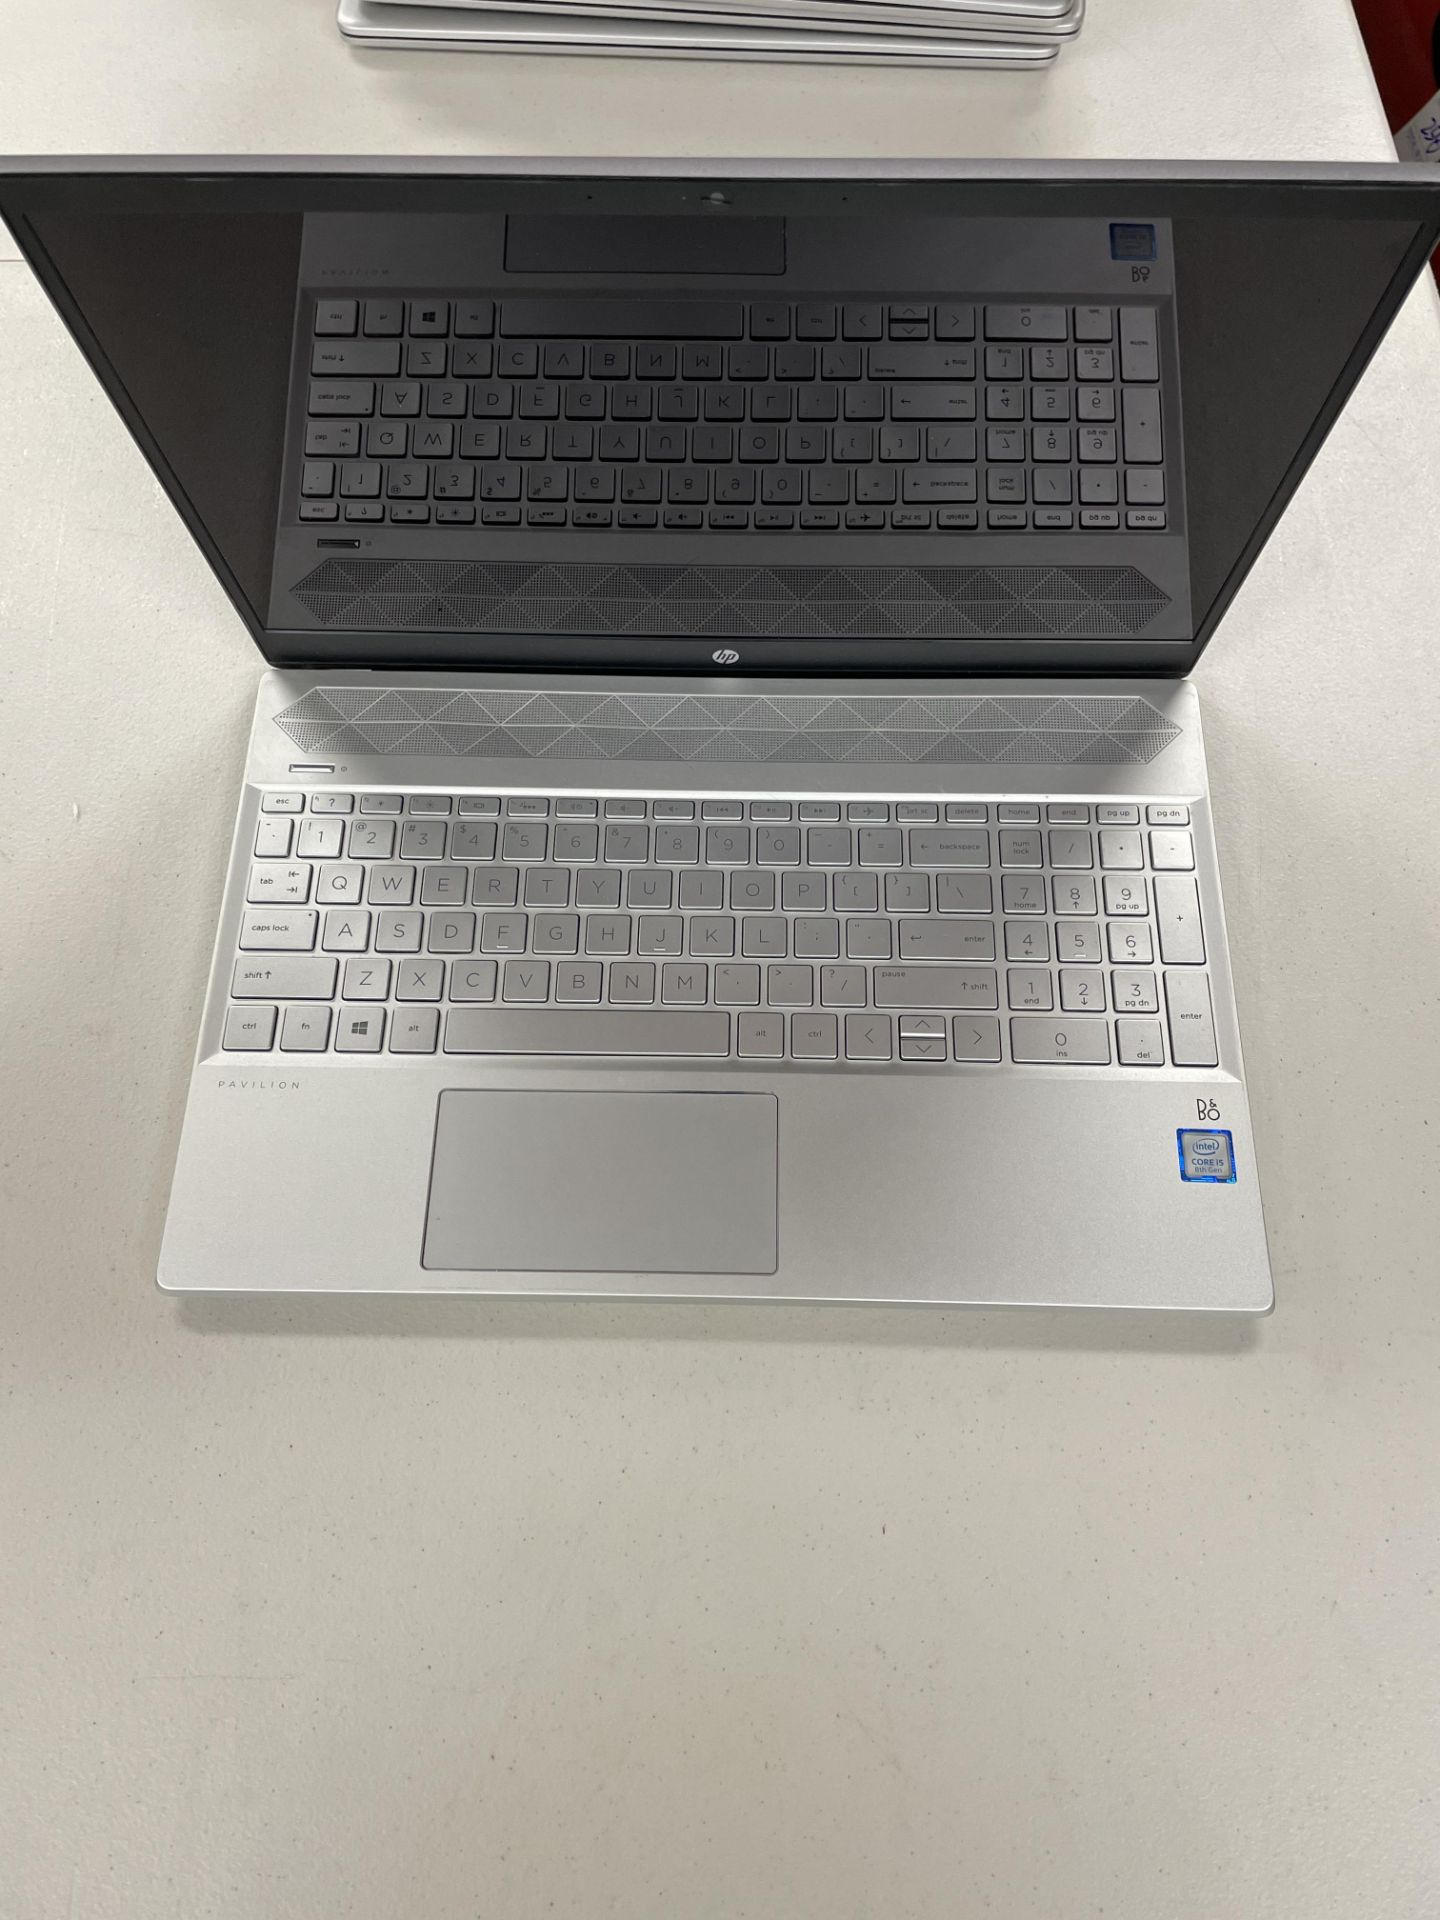 HP Core i5 8th Generation Pavilion Model 15-CS1065CL Laptop w/ Power Supply - Image 2 of 2